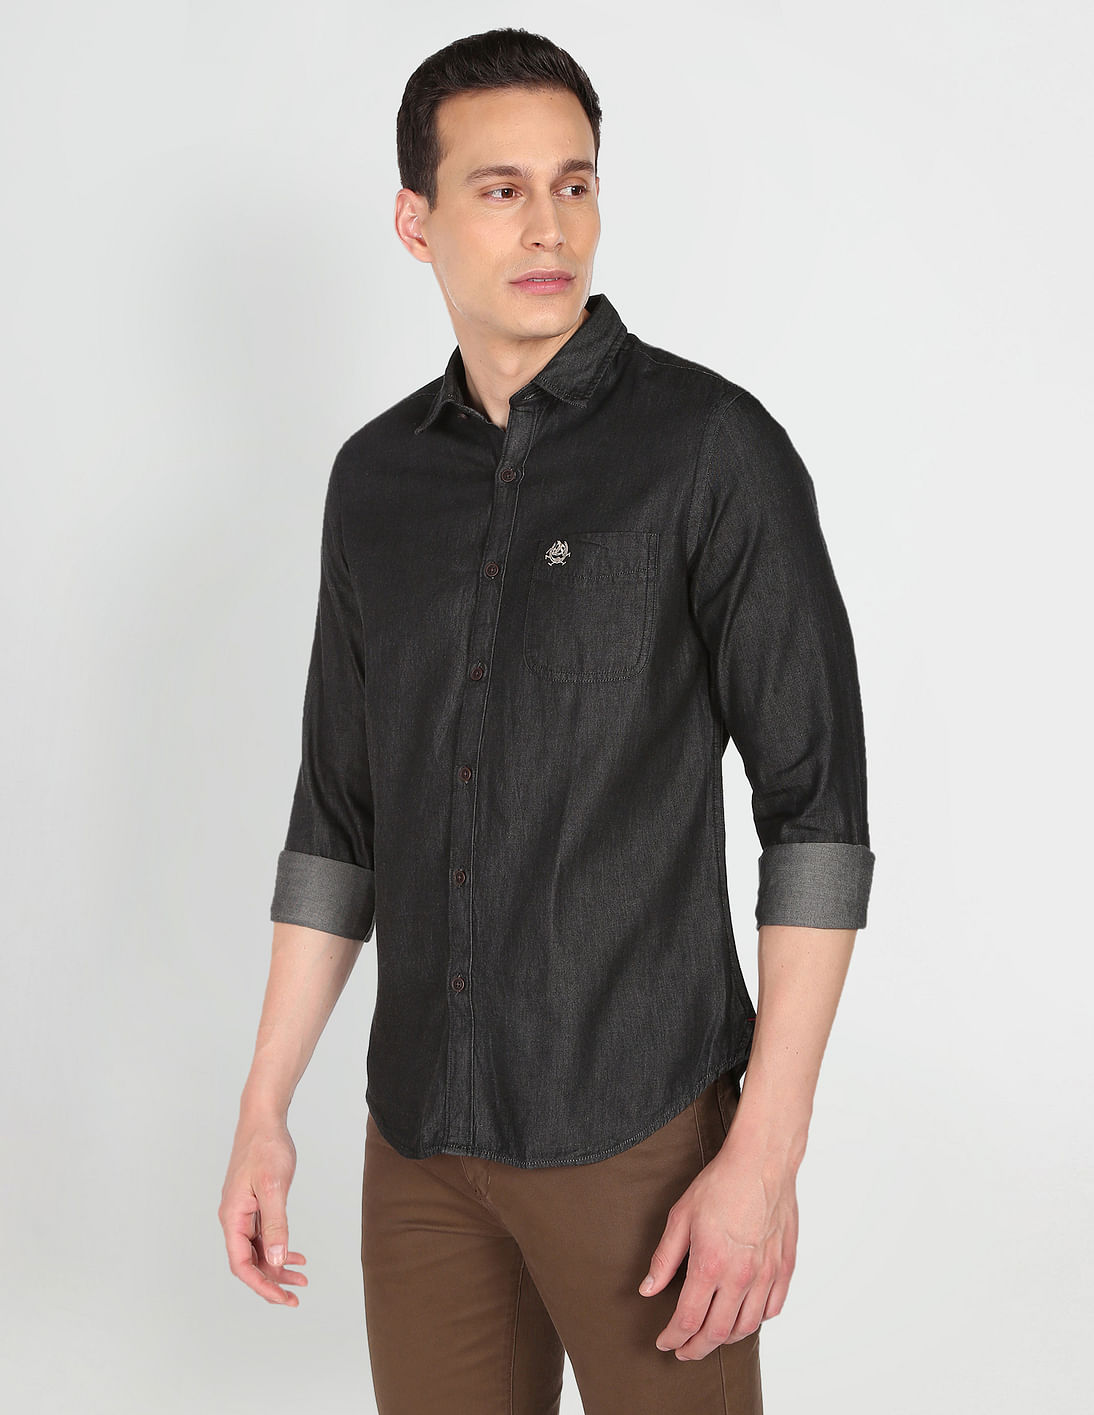 EMRISH Denim Double Pocket Black Long Sleeve Men's Casual Shirt (Denim-Black_L)  : Amazon.in: Clothing & Accessories